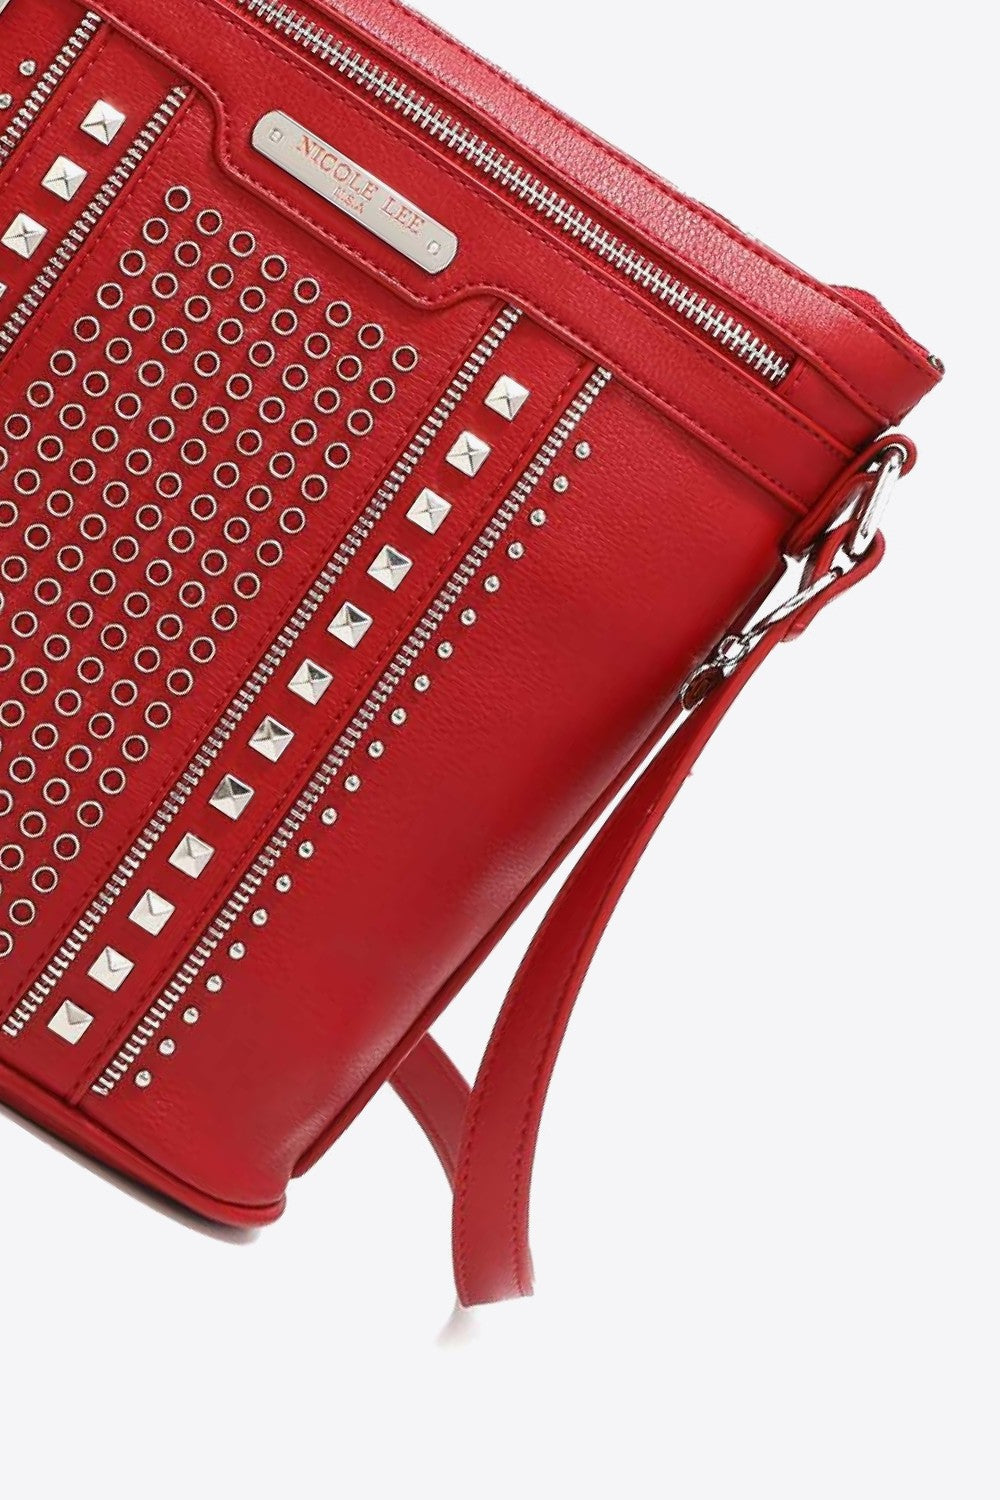 Nicole Lee USA Love Handbag - Tigbul's Fashion